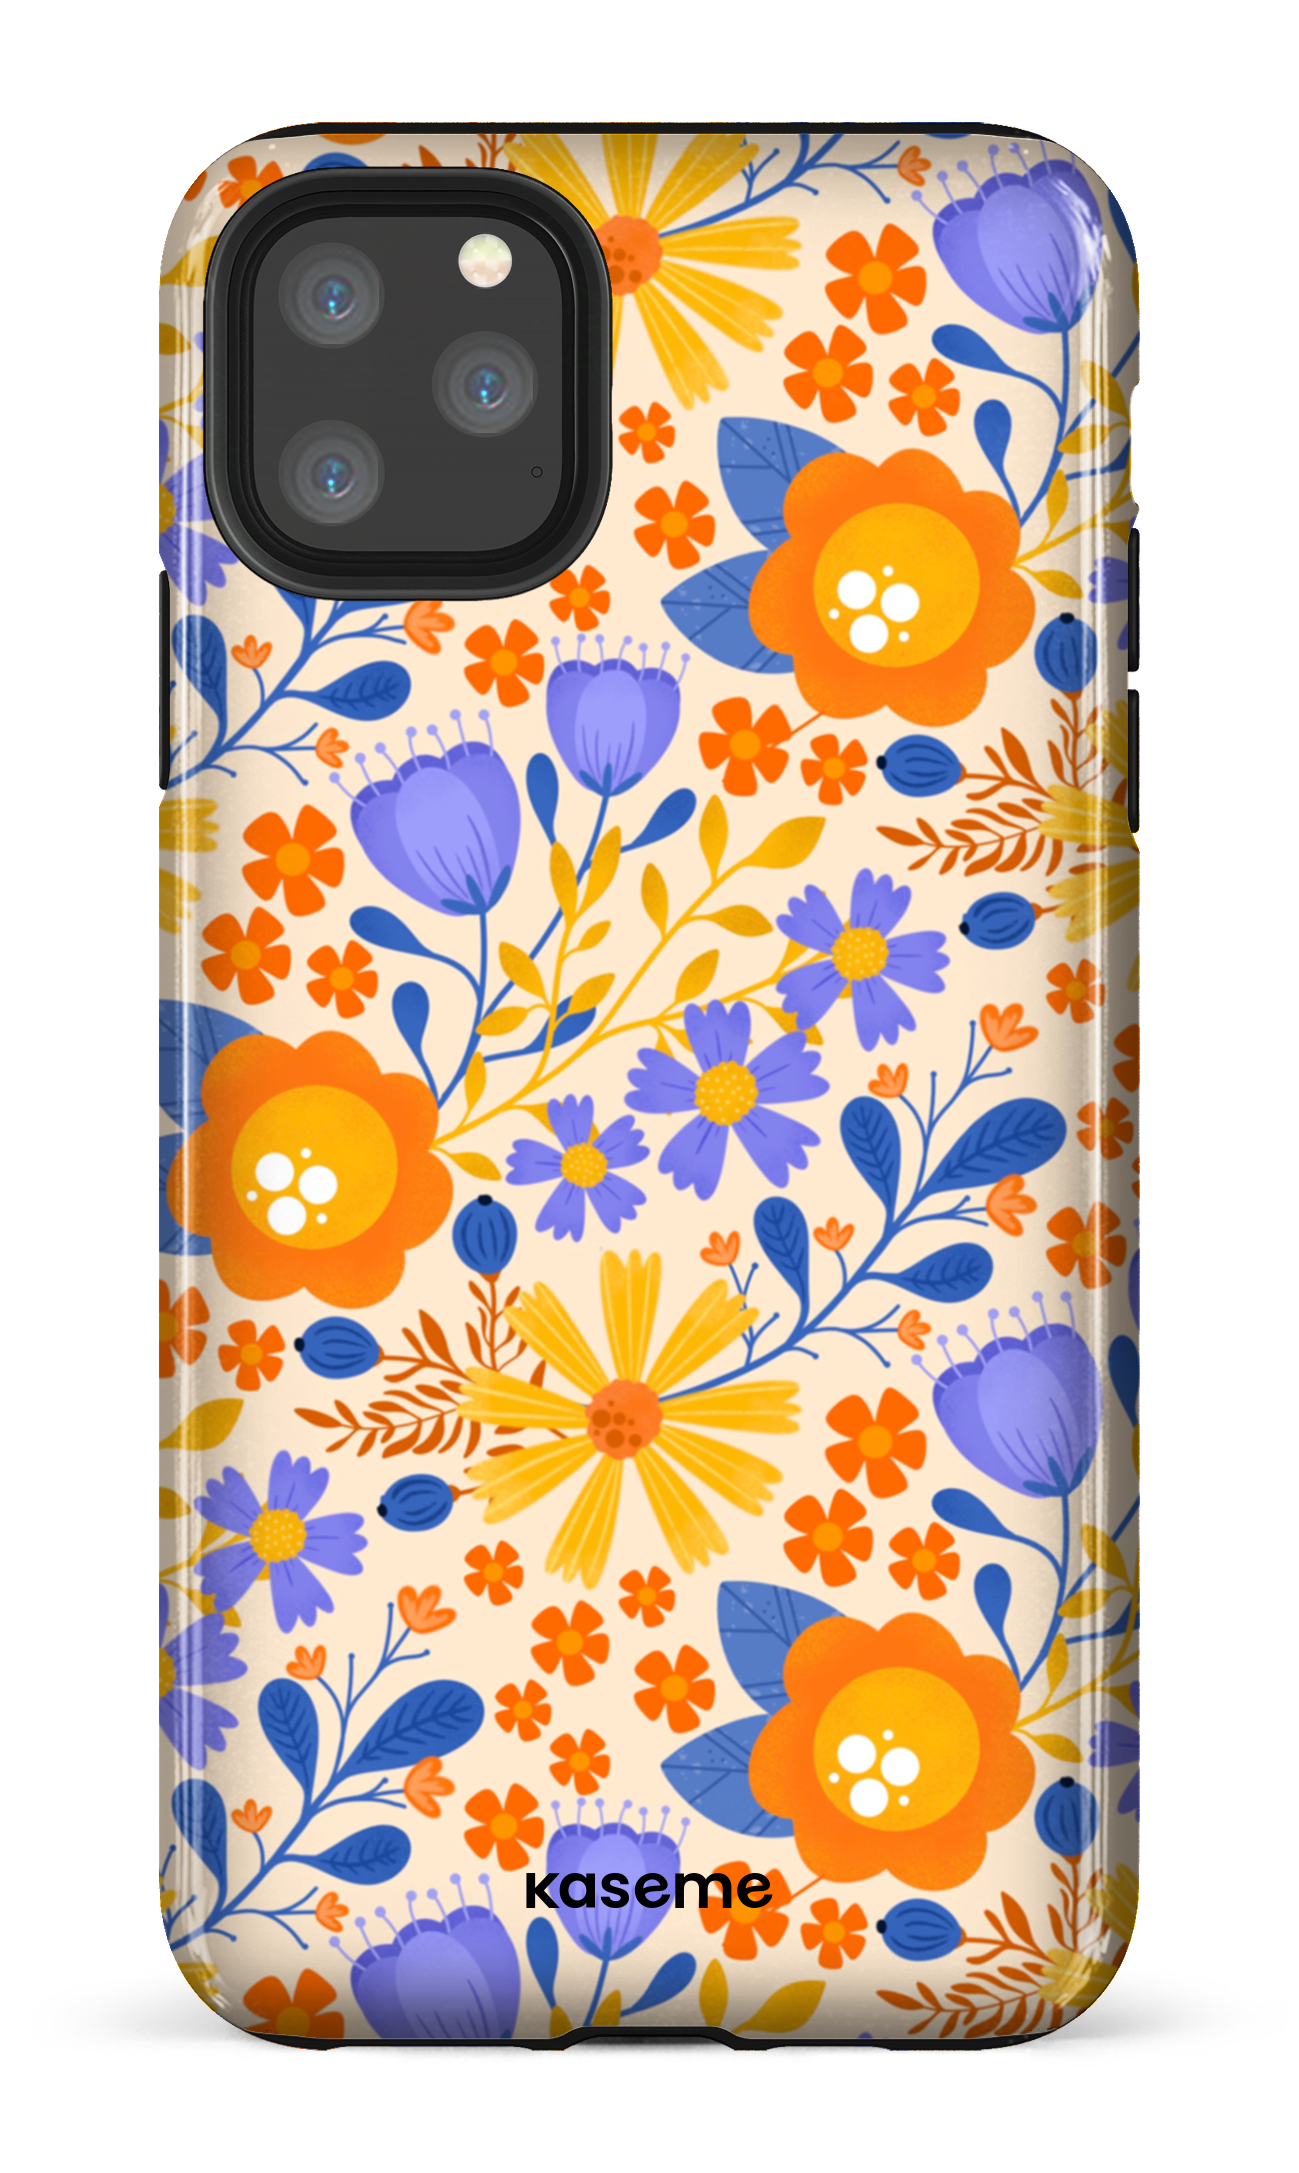 Autumn Bloom by Createdbyginny - iPhone 11 Pro Max